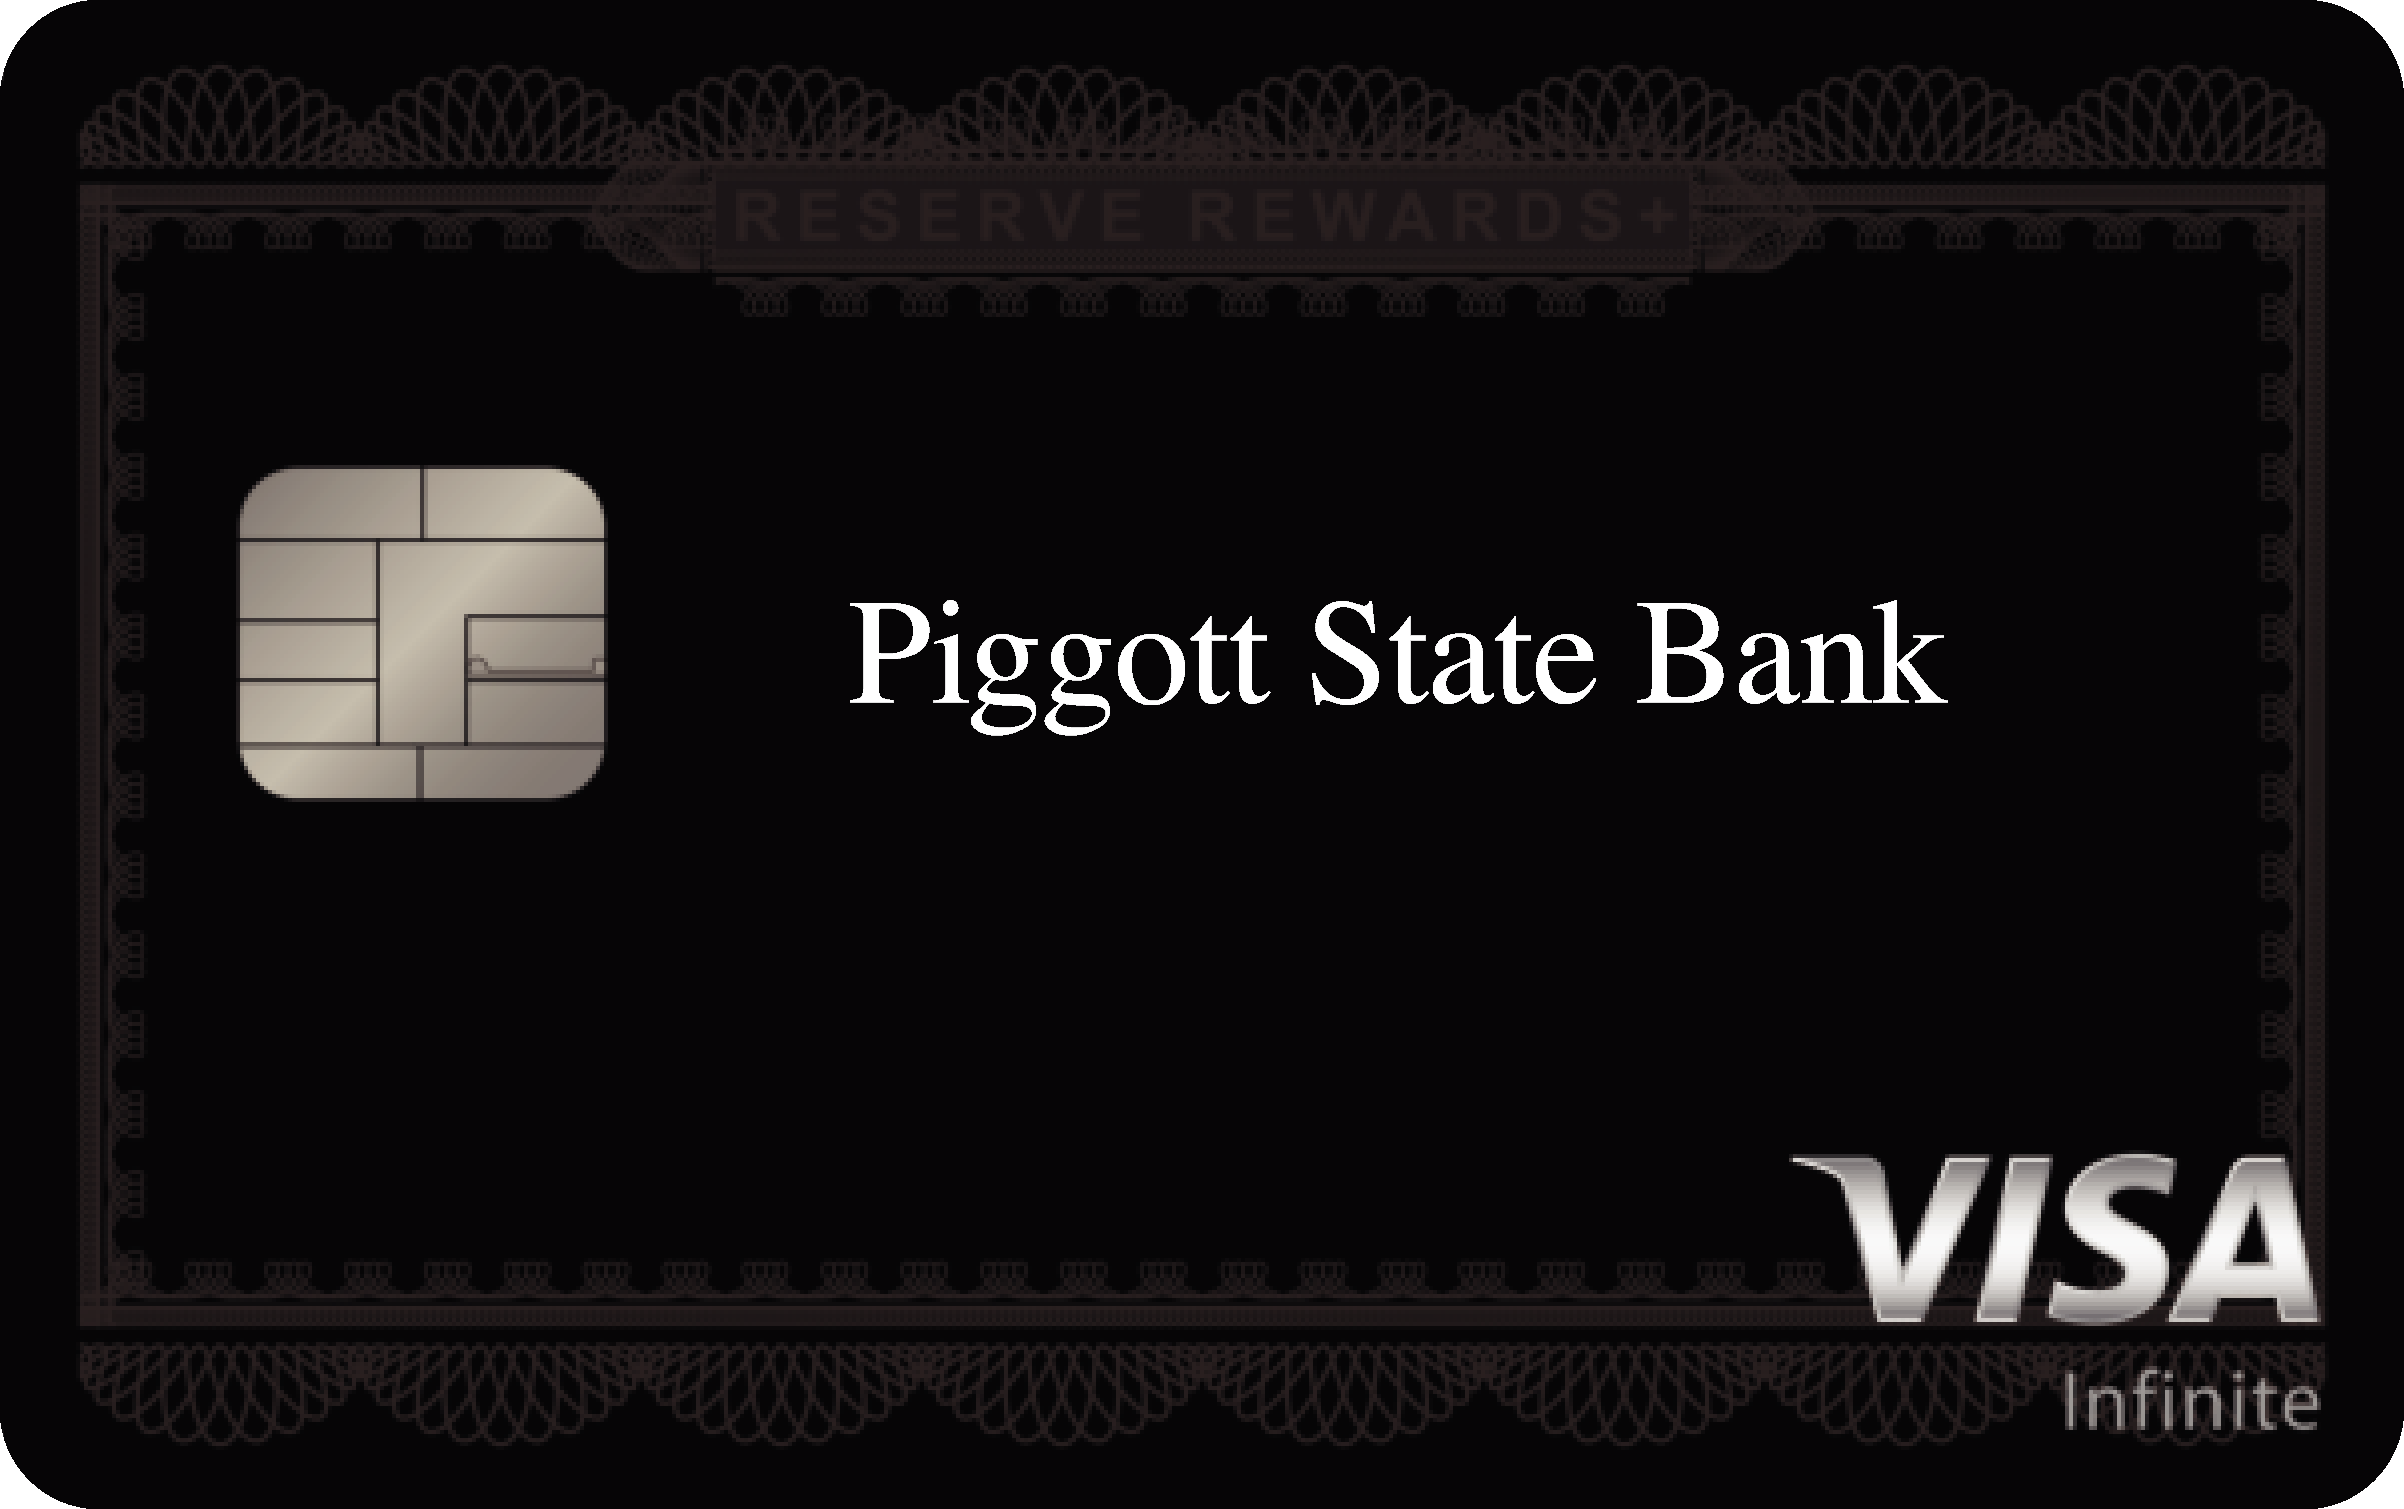 Piggott State Bank Reserve Rewards+ Card